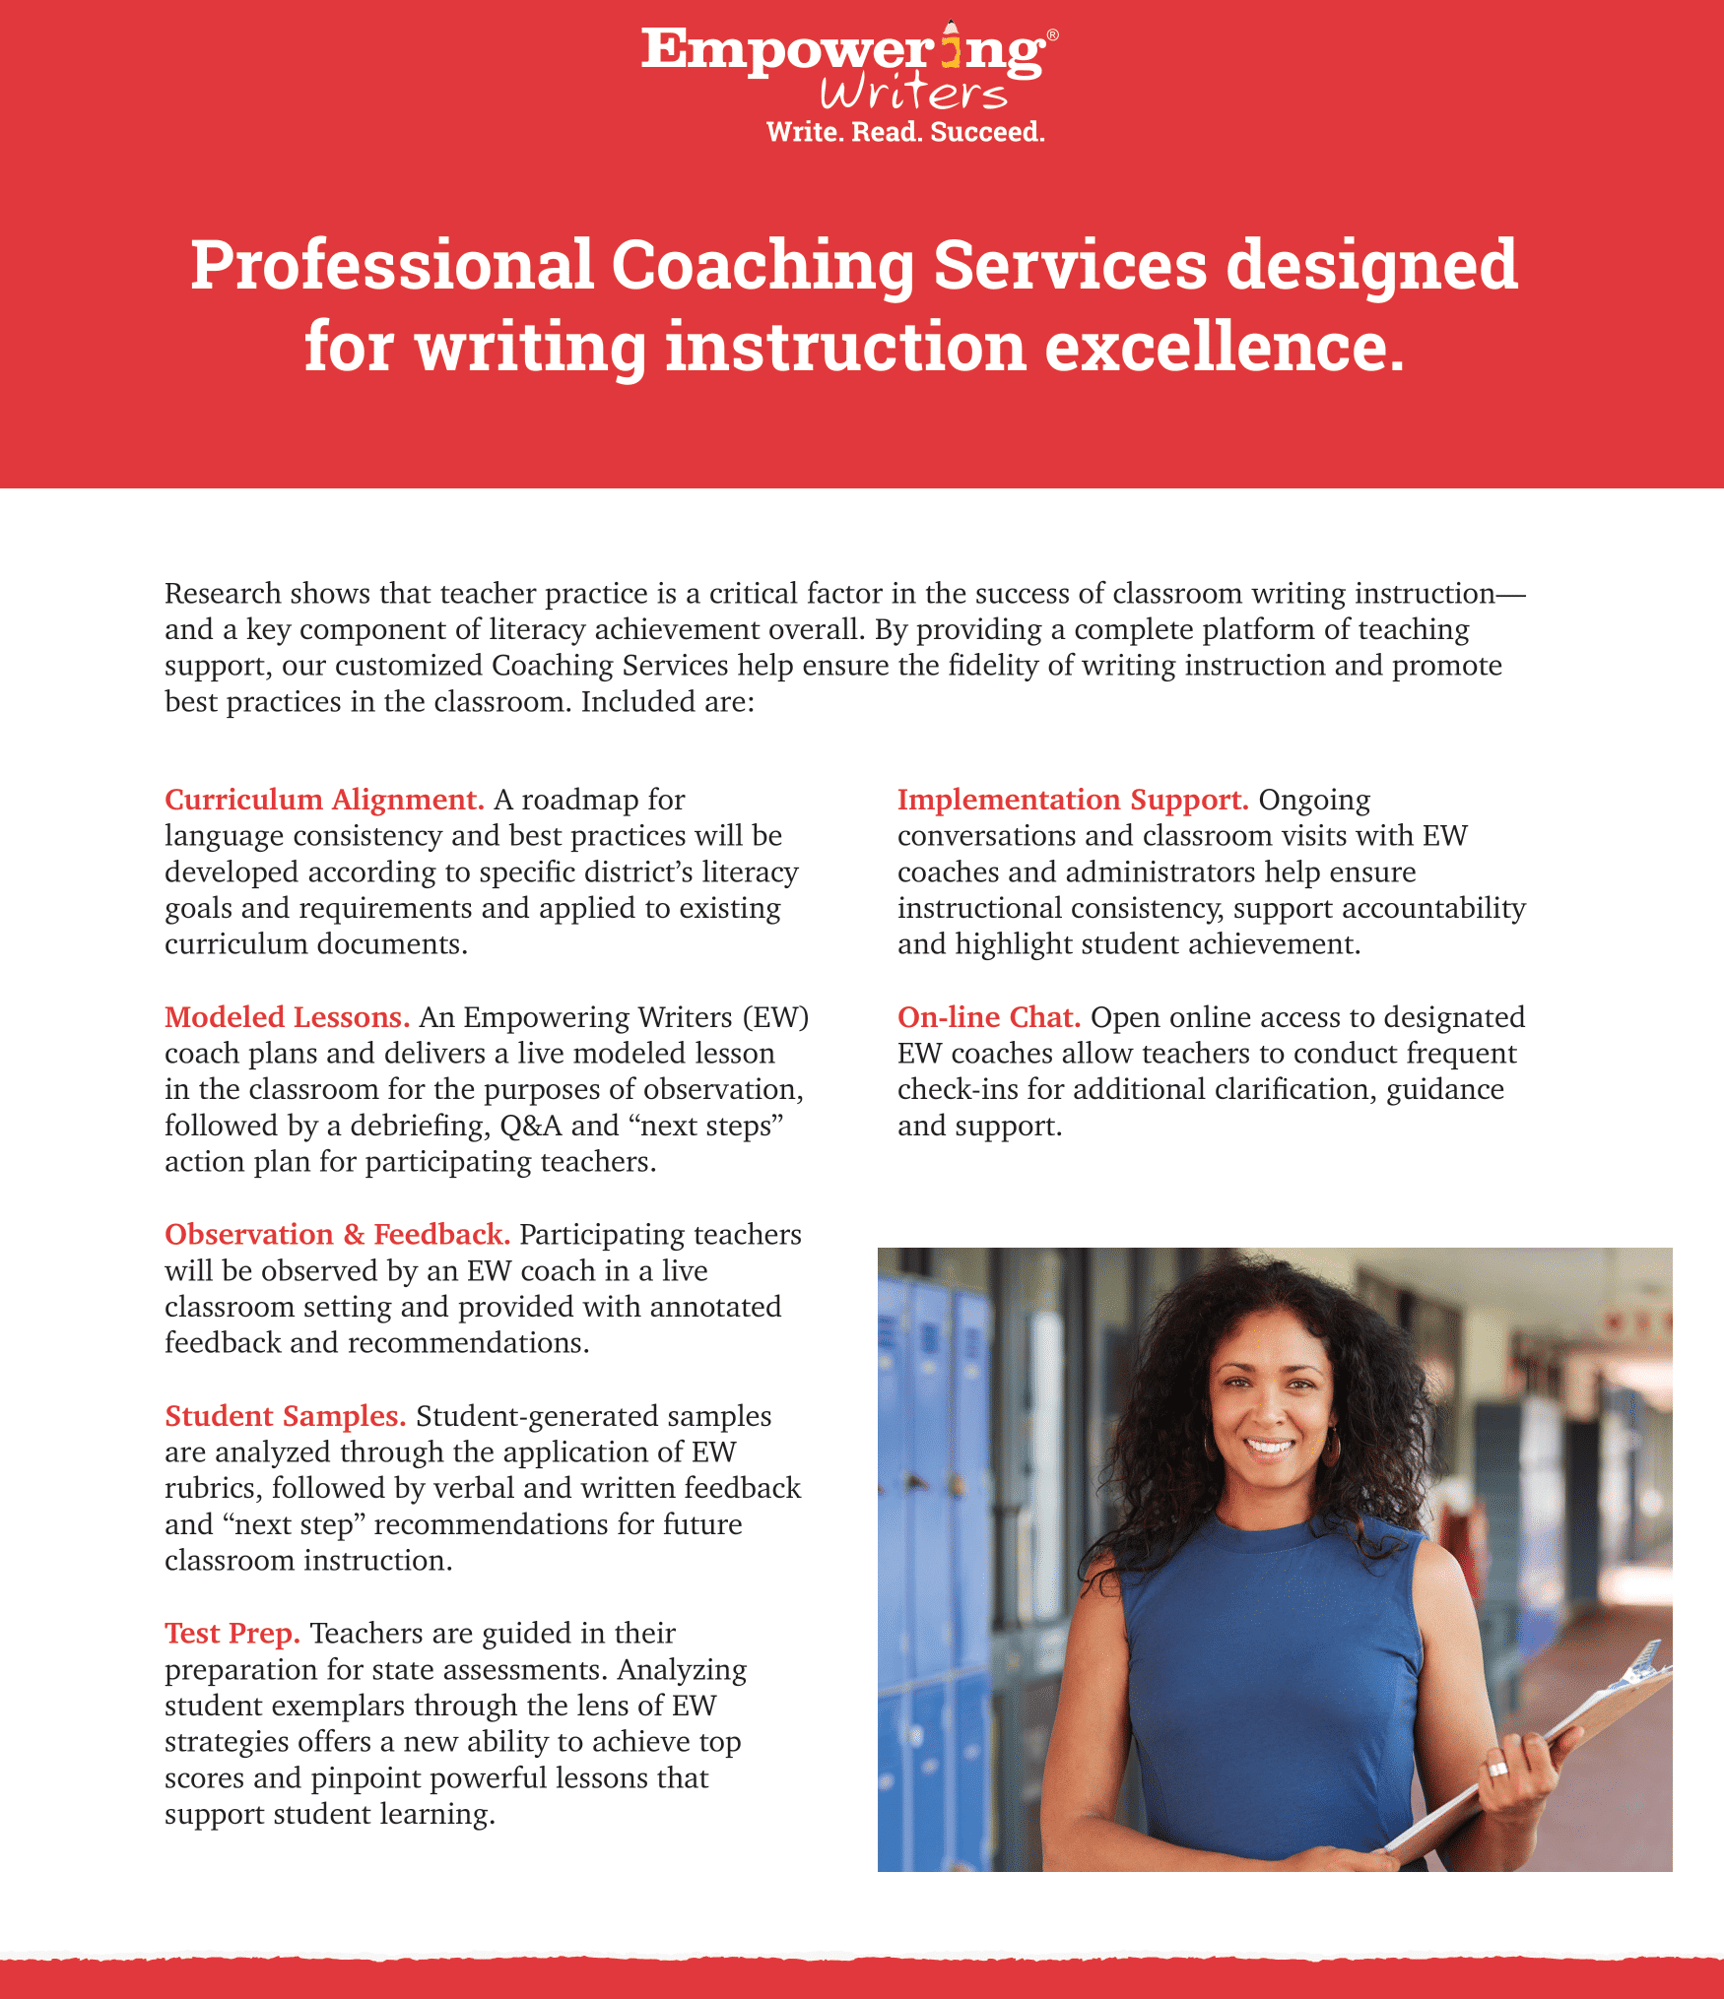 Professional coaching